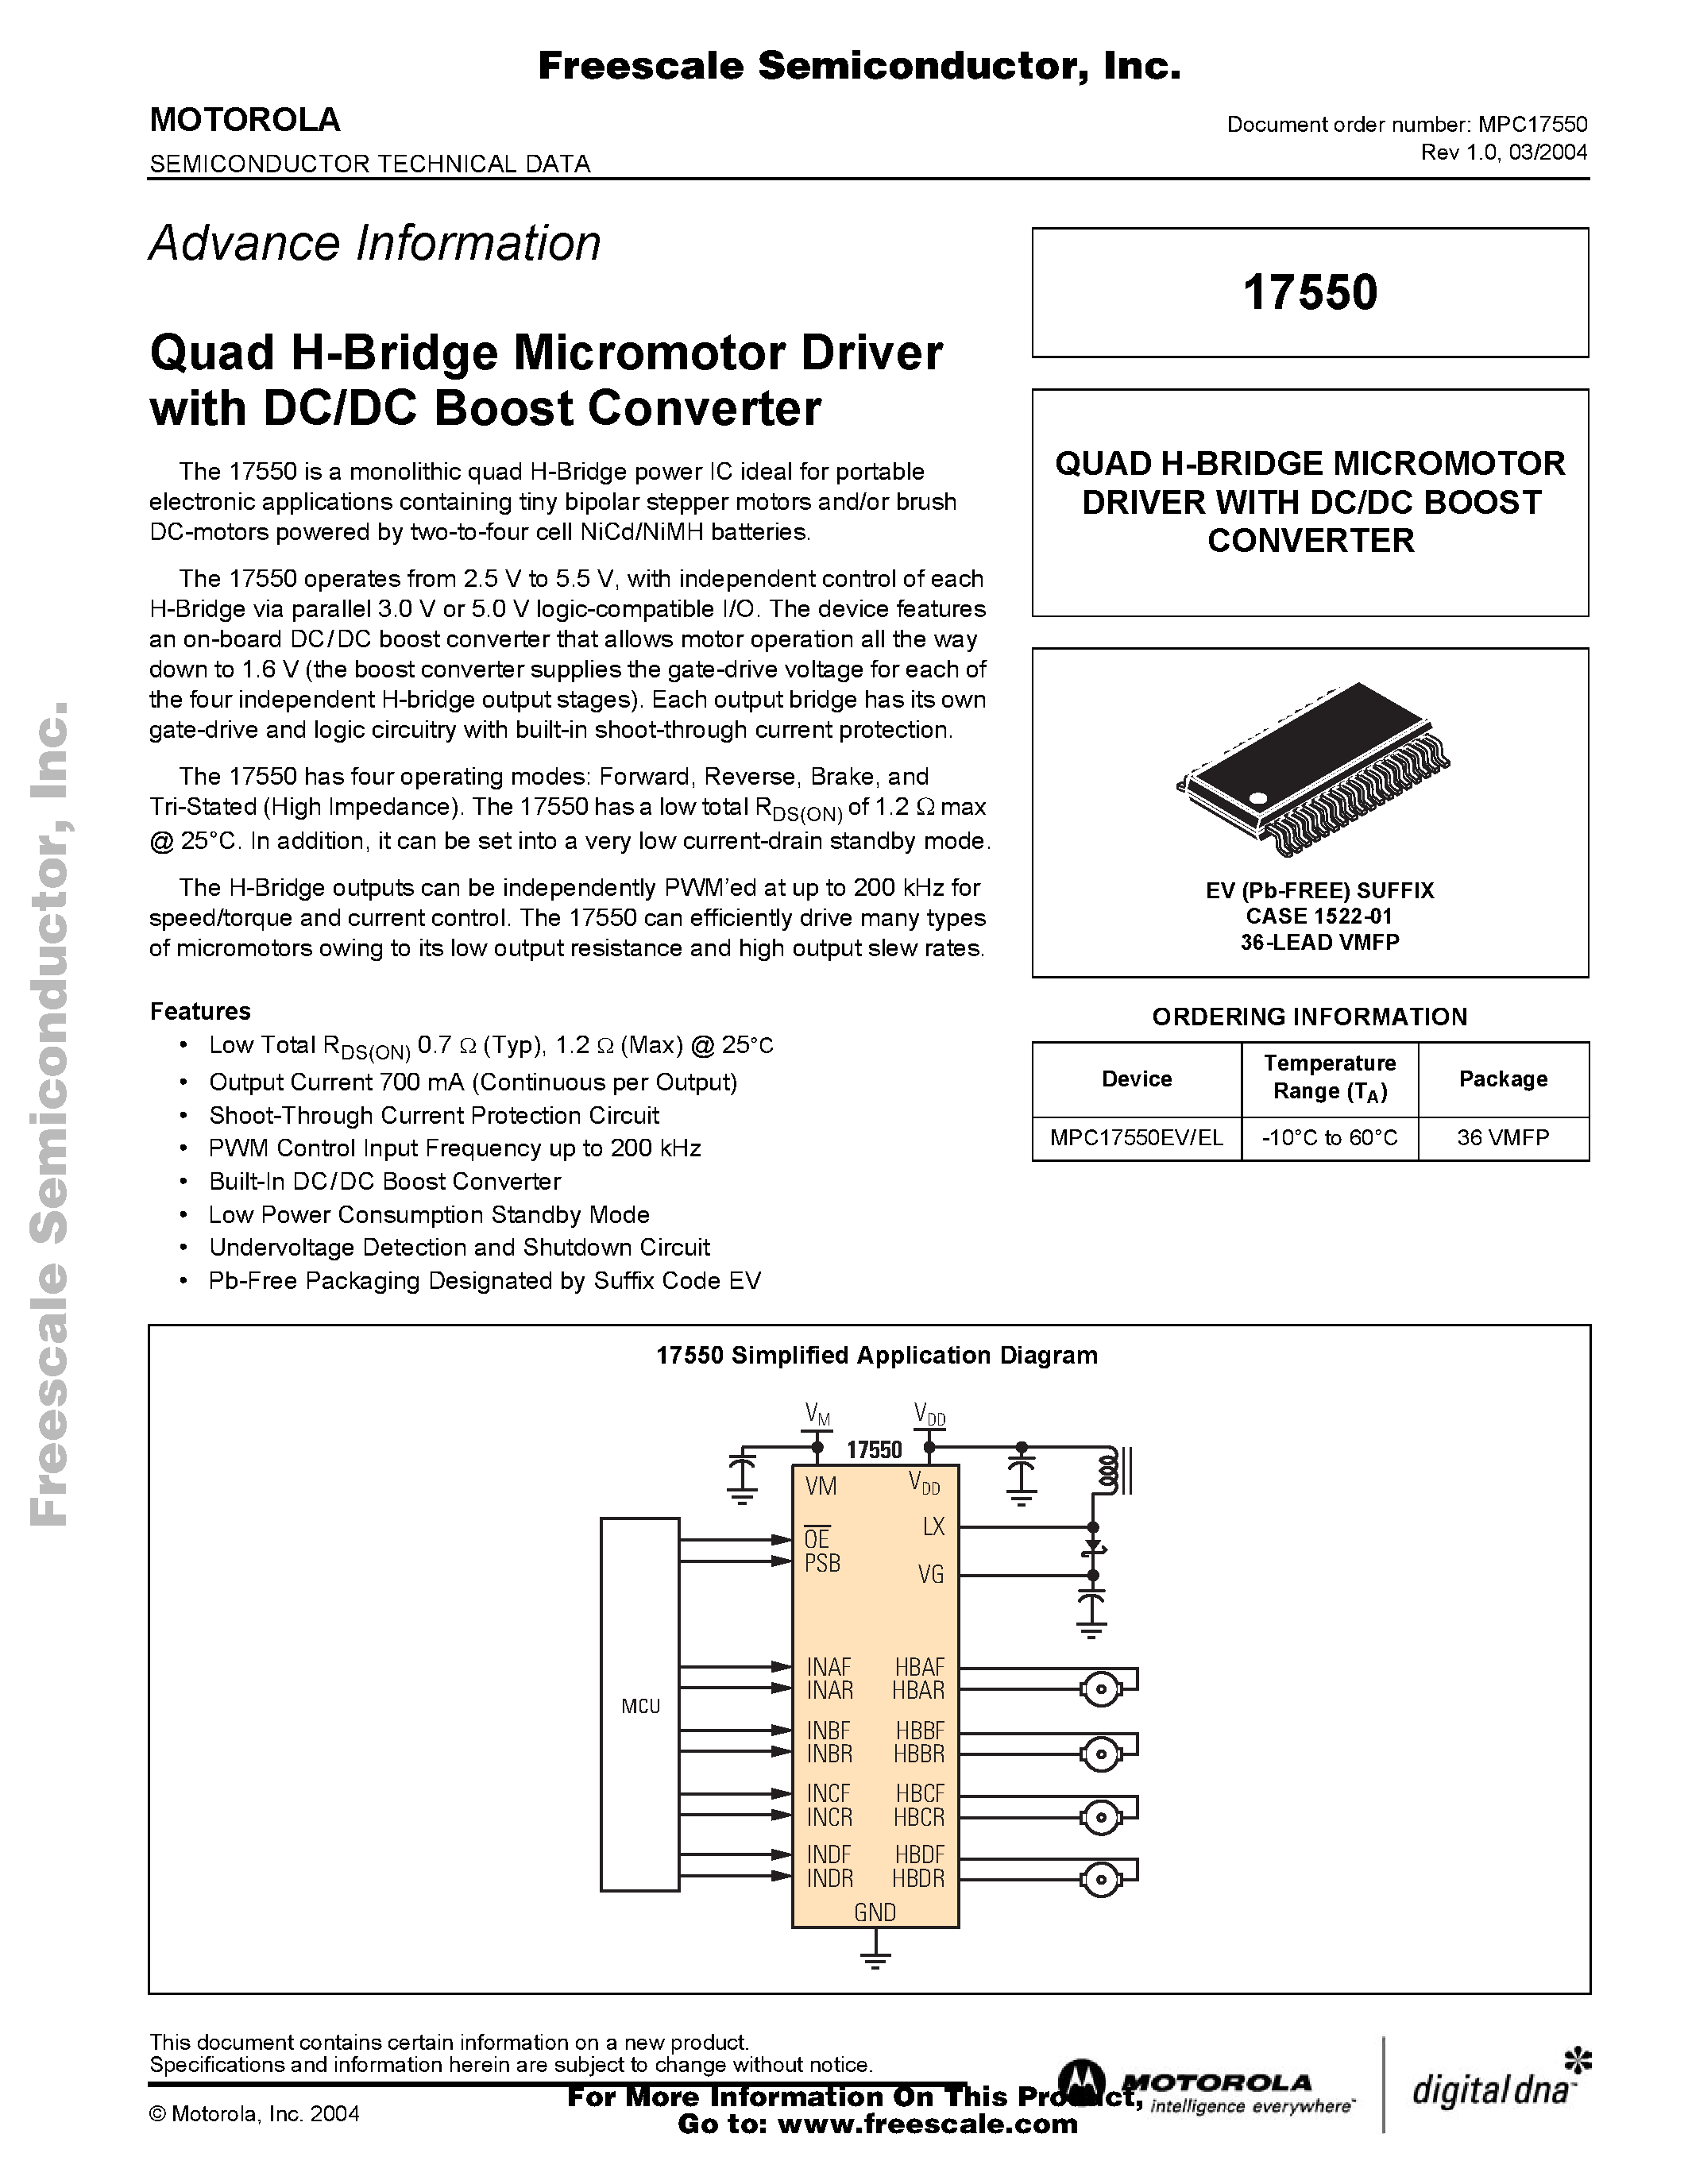 Даташит MPC17550EV - Quad H-Bridge Micromotor Driver with DC/DC Boost Converter страница 1